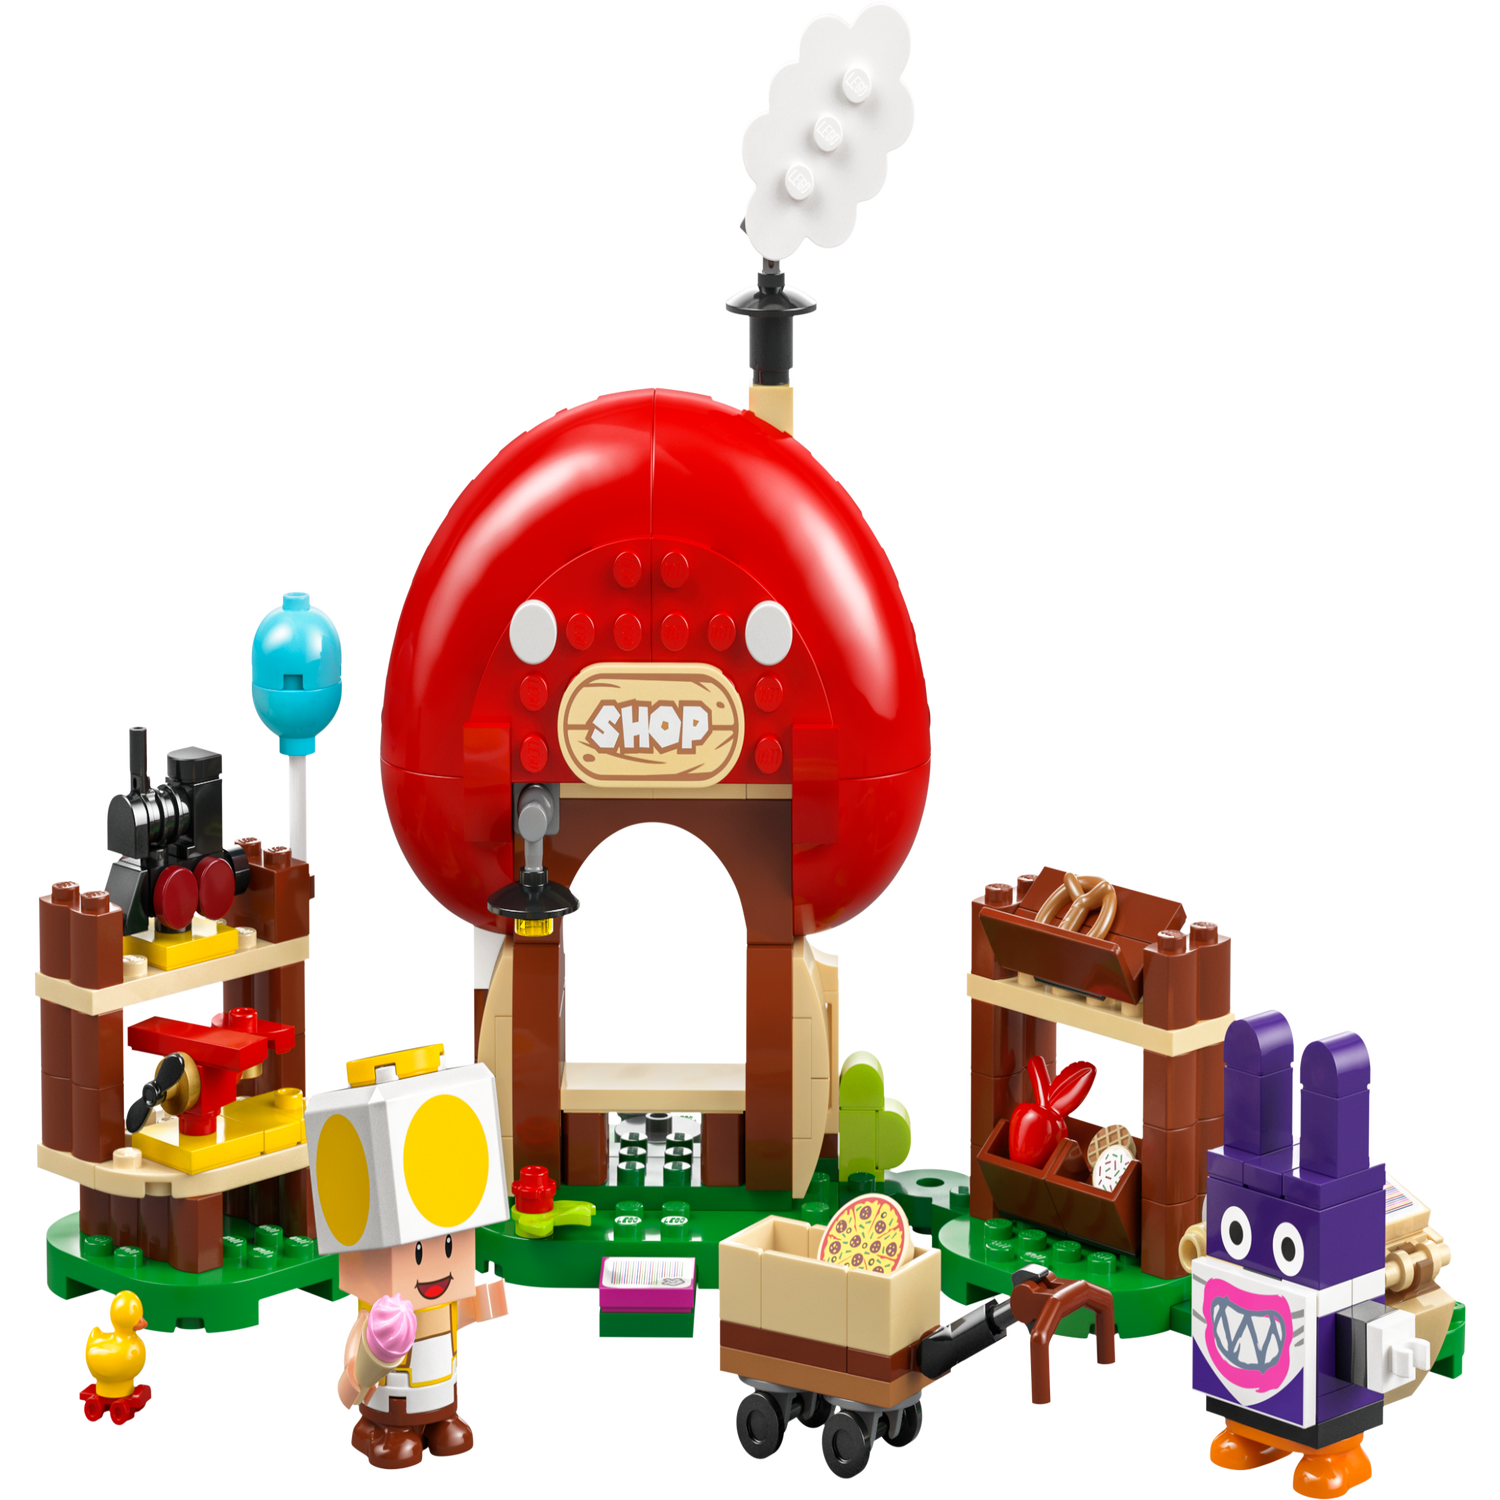 Nabbit at Toad's Shop Expansion Set 71429, LEGO® Super Mario™